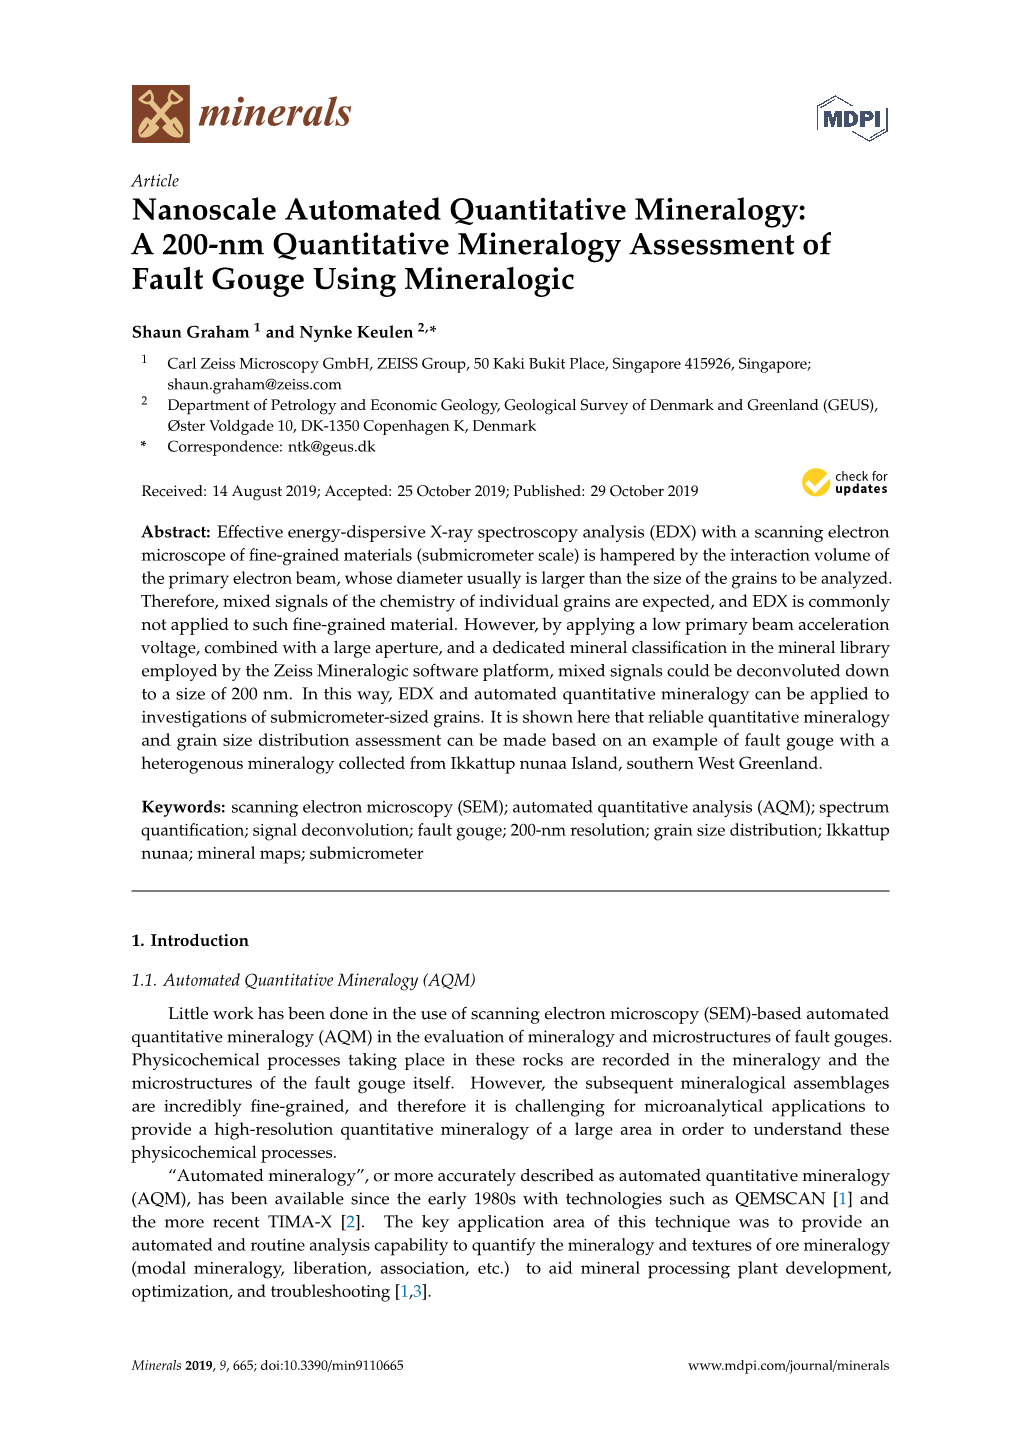 Nanoscale Automated Quantitative Mineralogy: a 200-Nm Quantitative Mineralogy Assessment of Fault Gouge Using Mineralogic